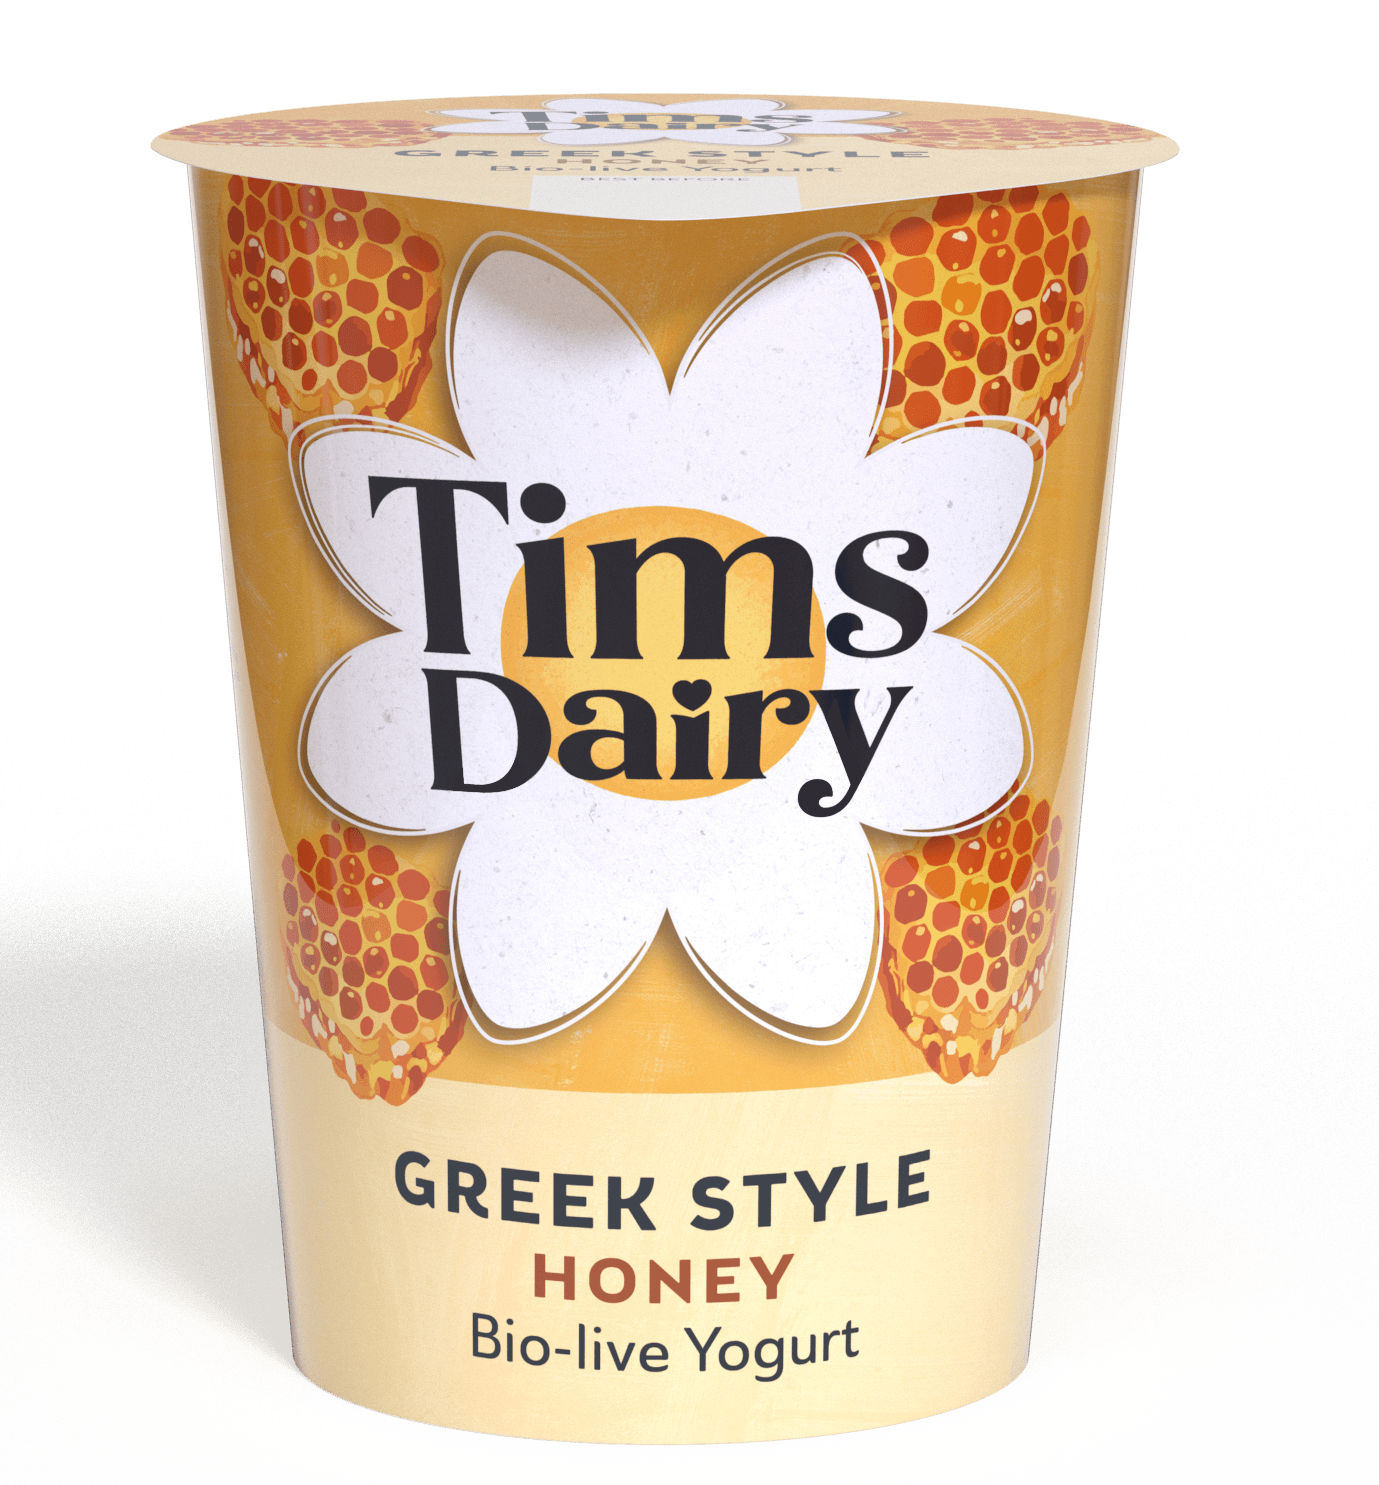 Tims Dairy New Look Greek Style Honey Yogurt